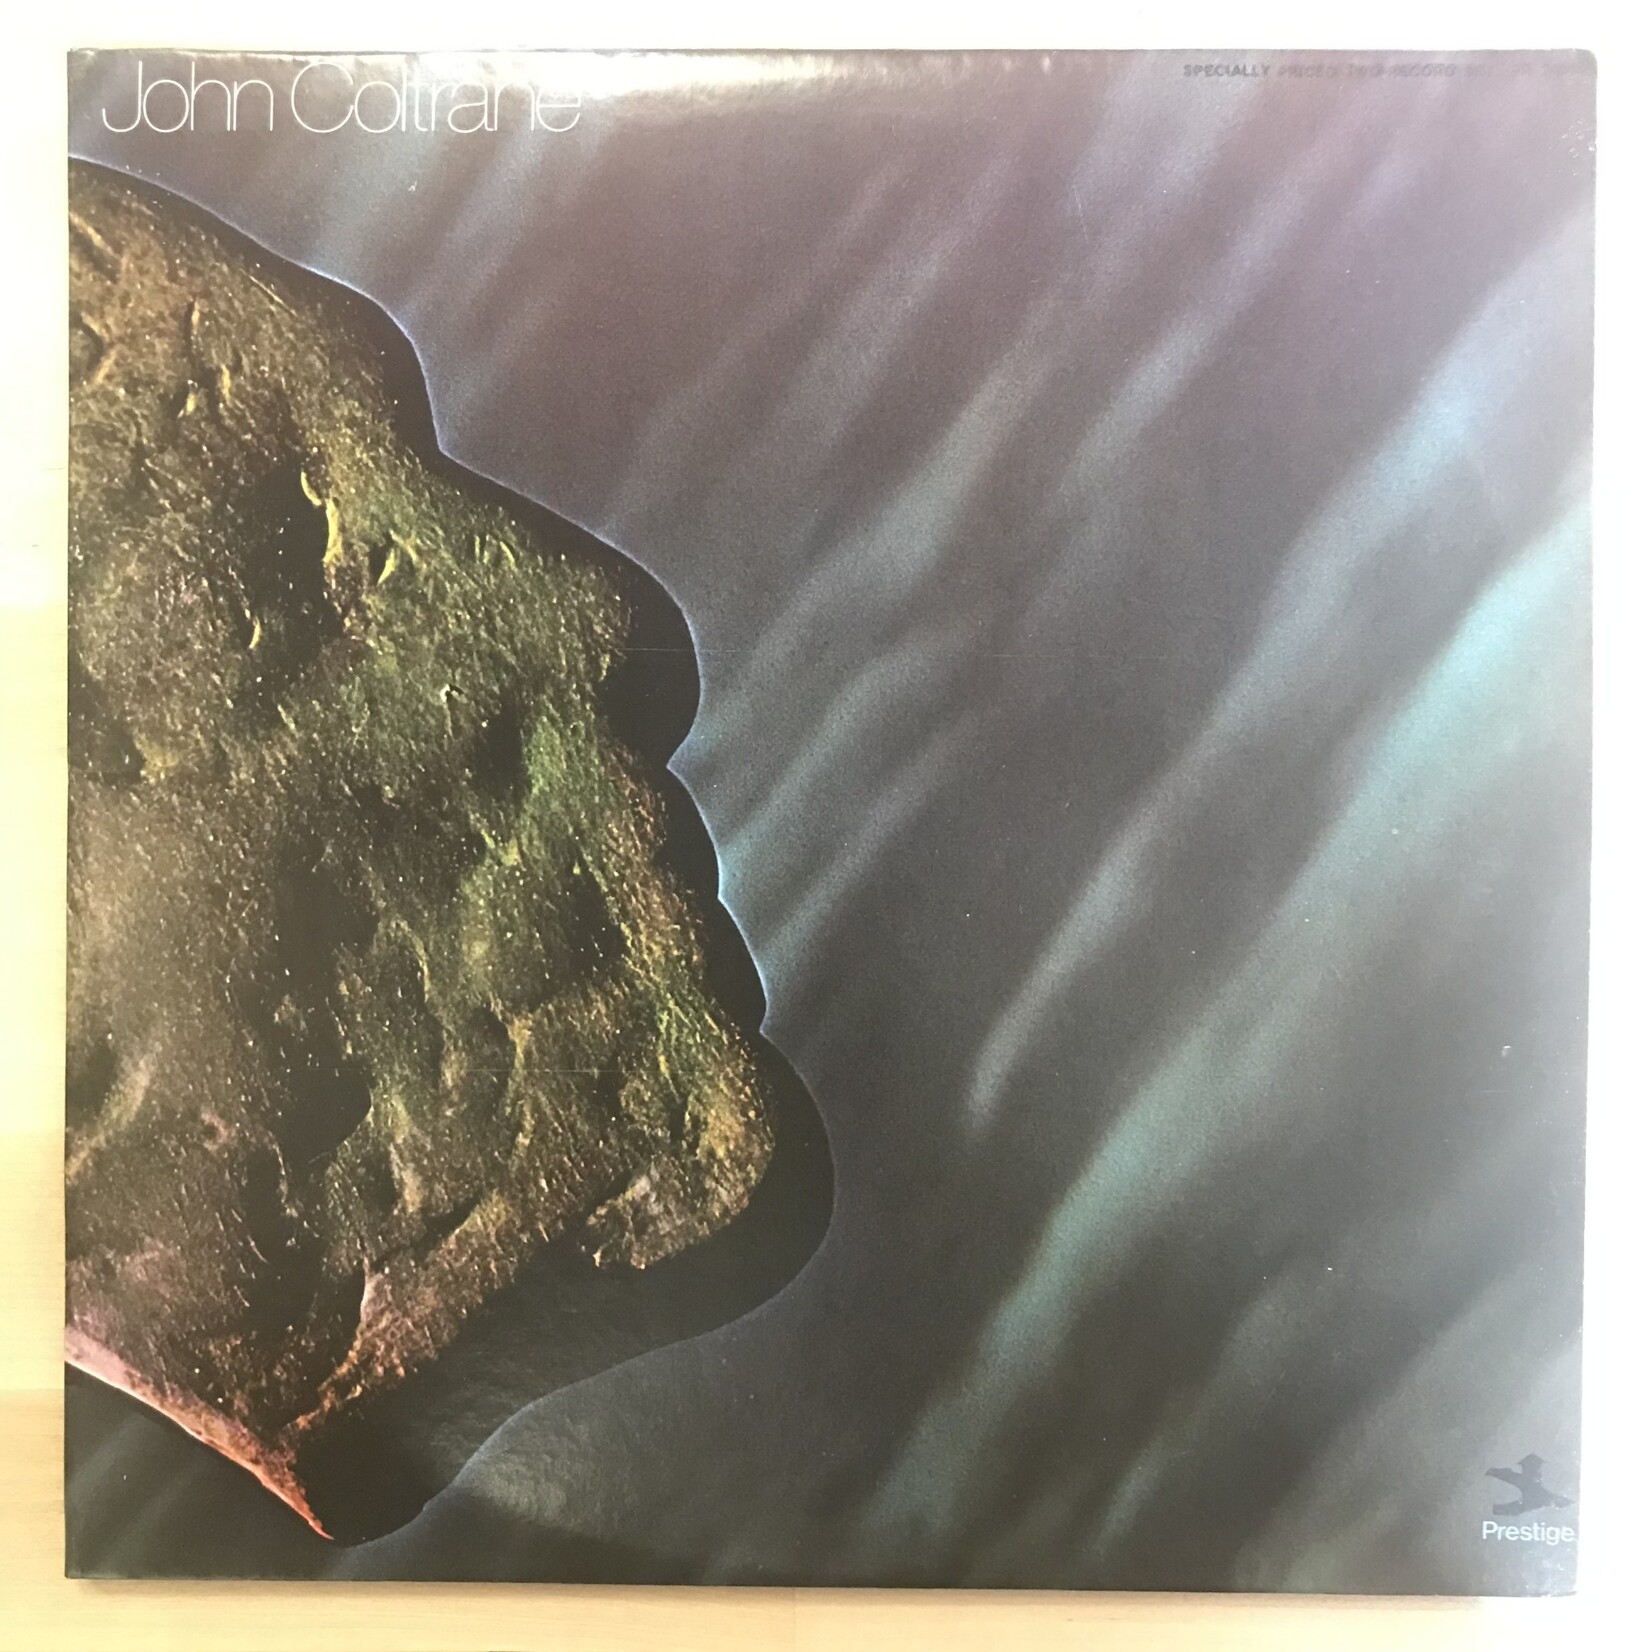 John Coltrane - More Lasting Than Bronze - PR24014 S1 - Vinyl LP (USED)